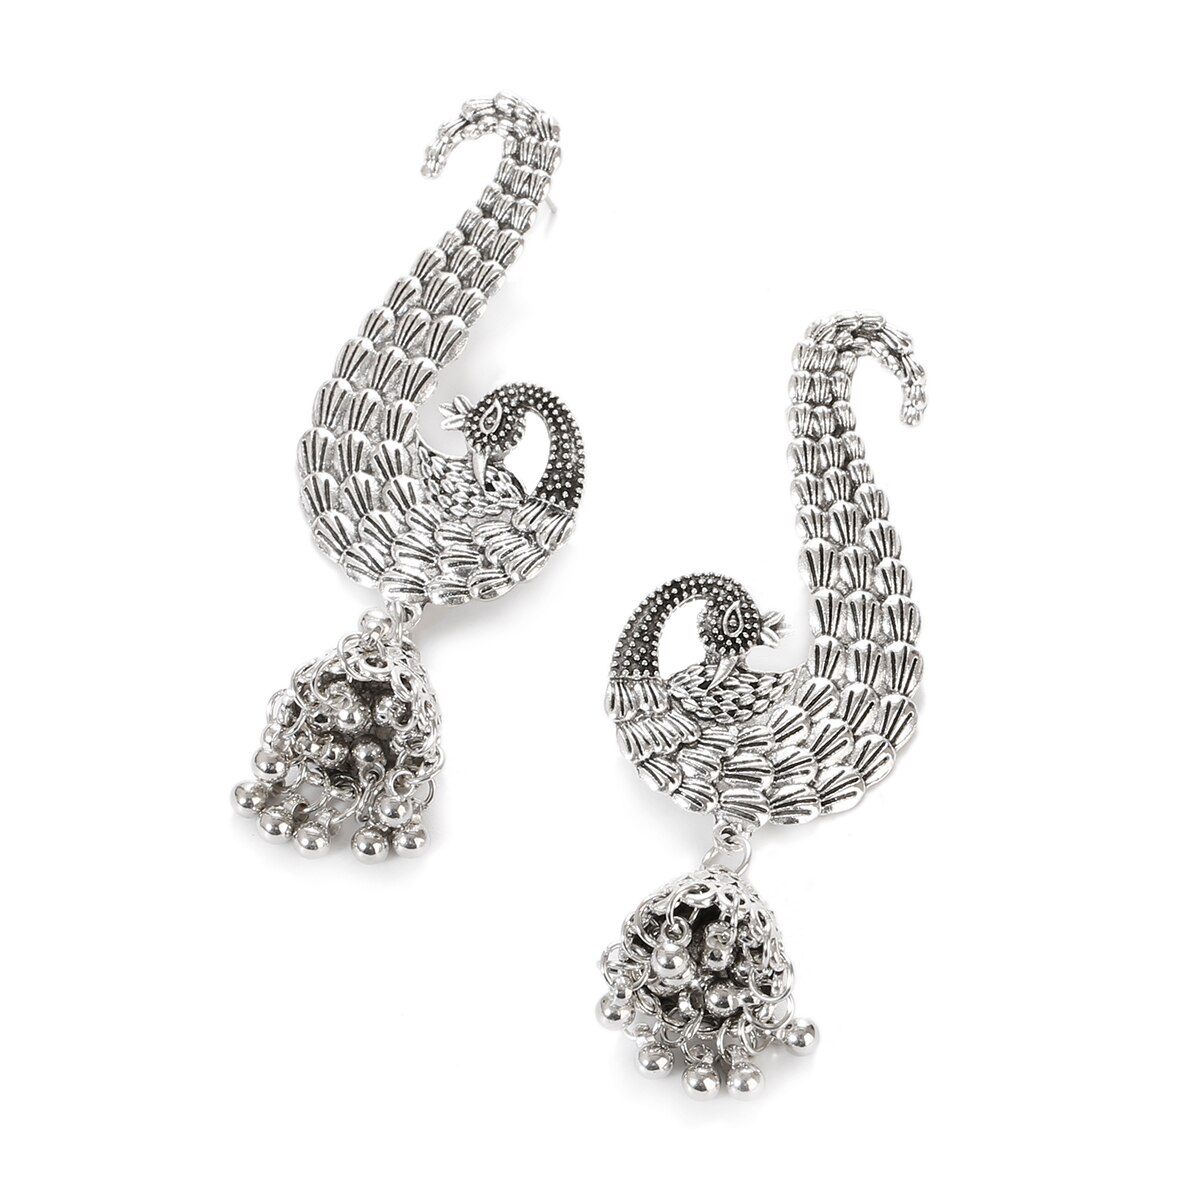 Retro-Luxury-Peacock-Indian-Earrings-For-Women-Ethnic-Gold-Color-Earrings-Piercing-Wedding-Jewelry-A-3256803821359707-4